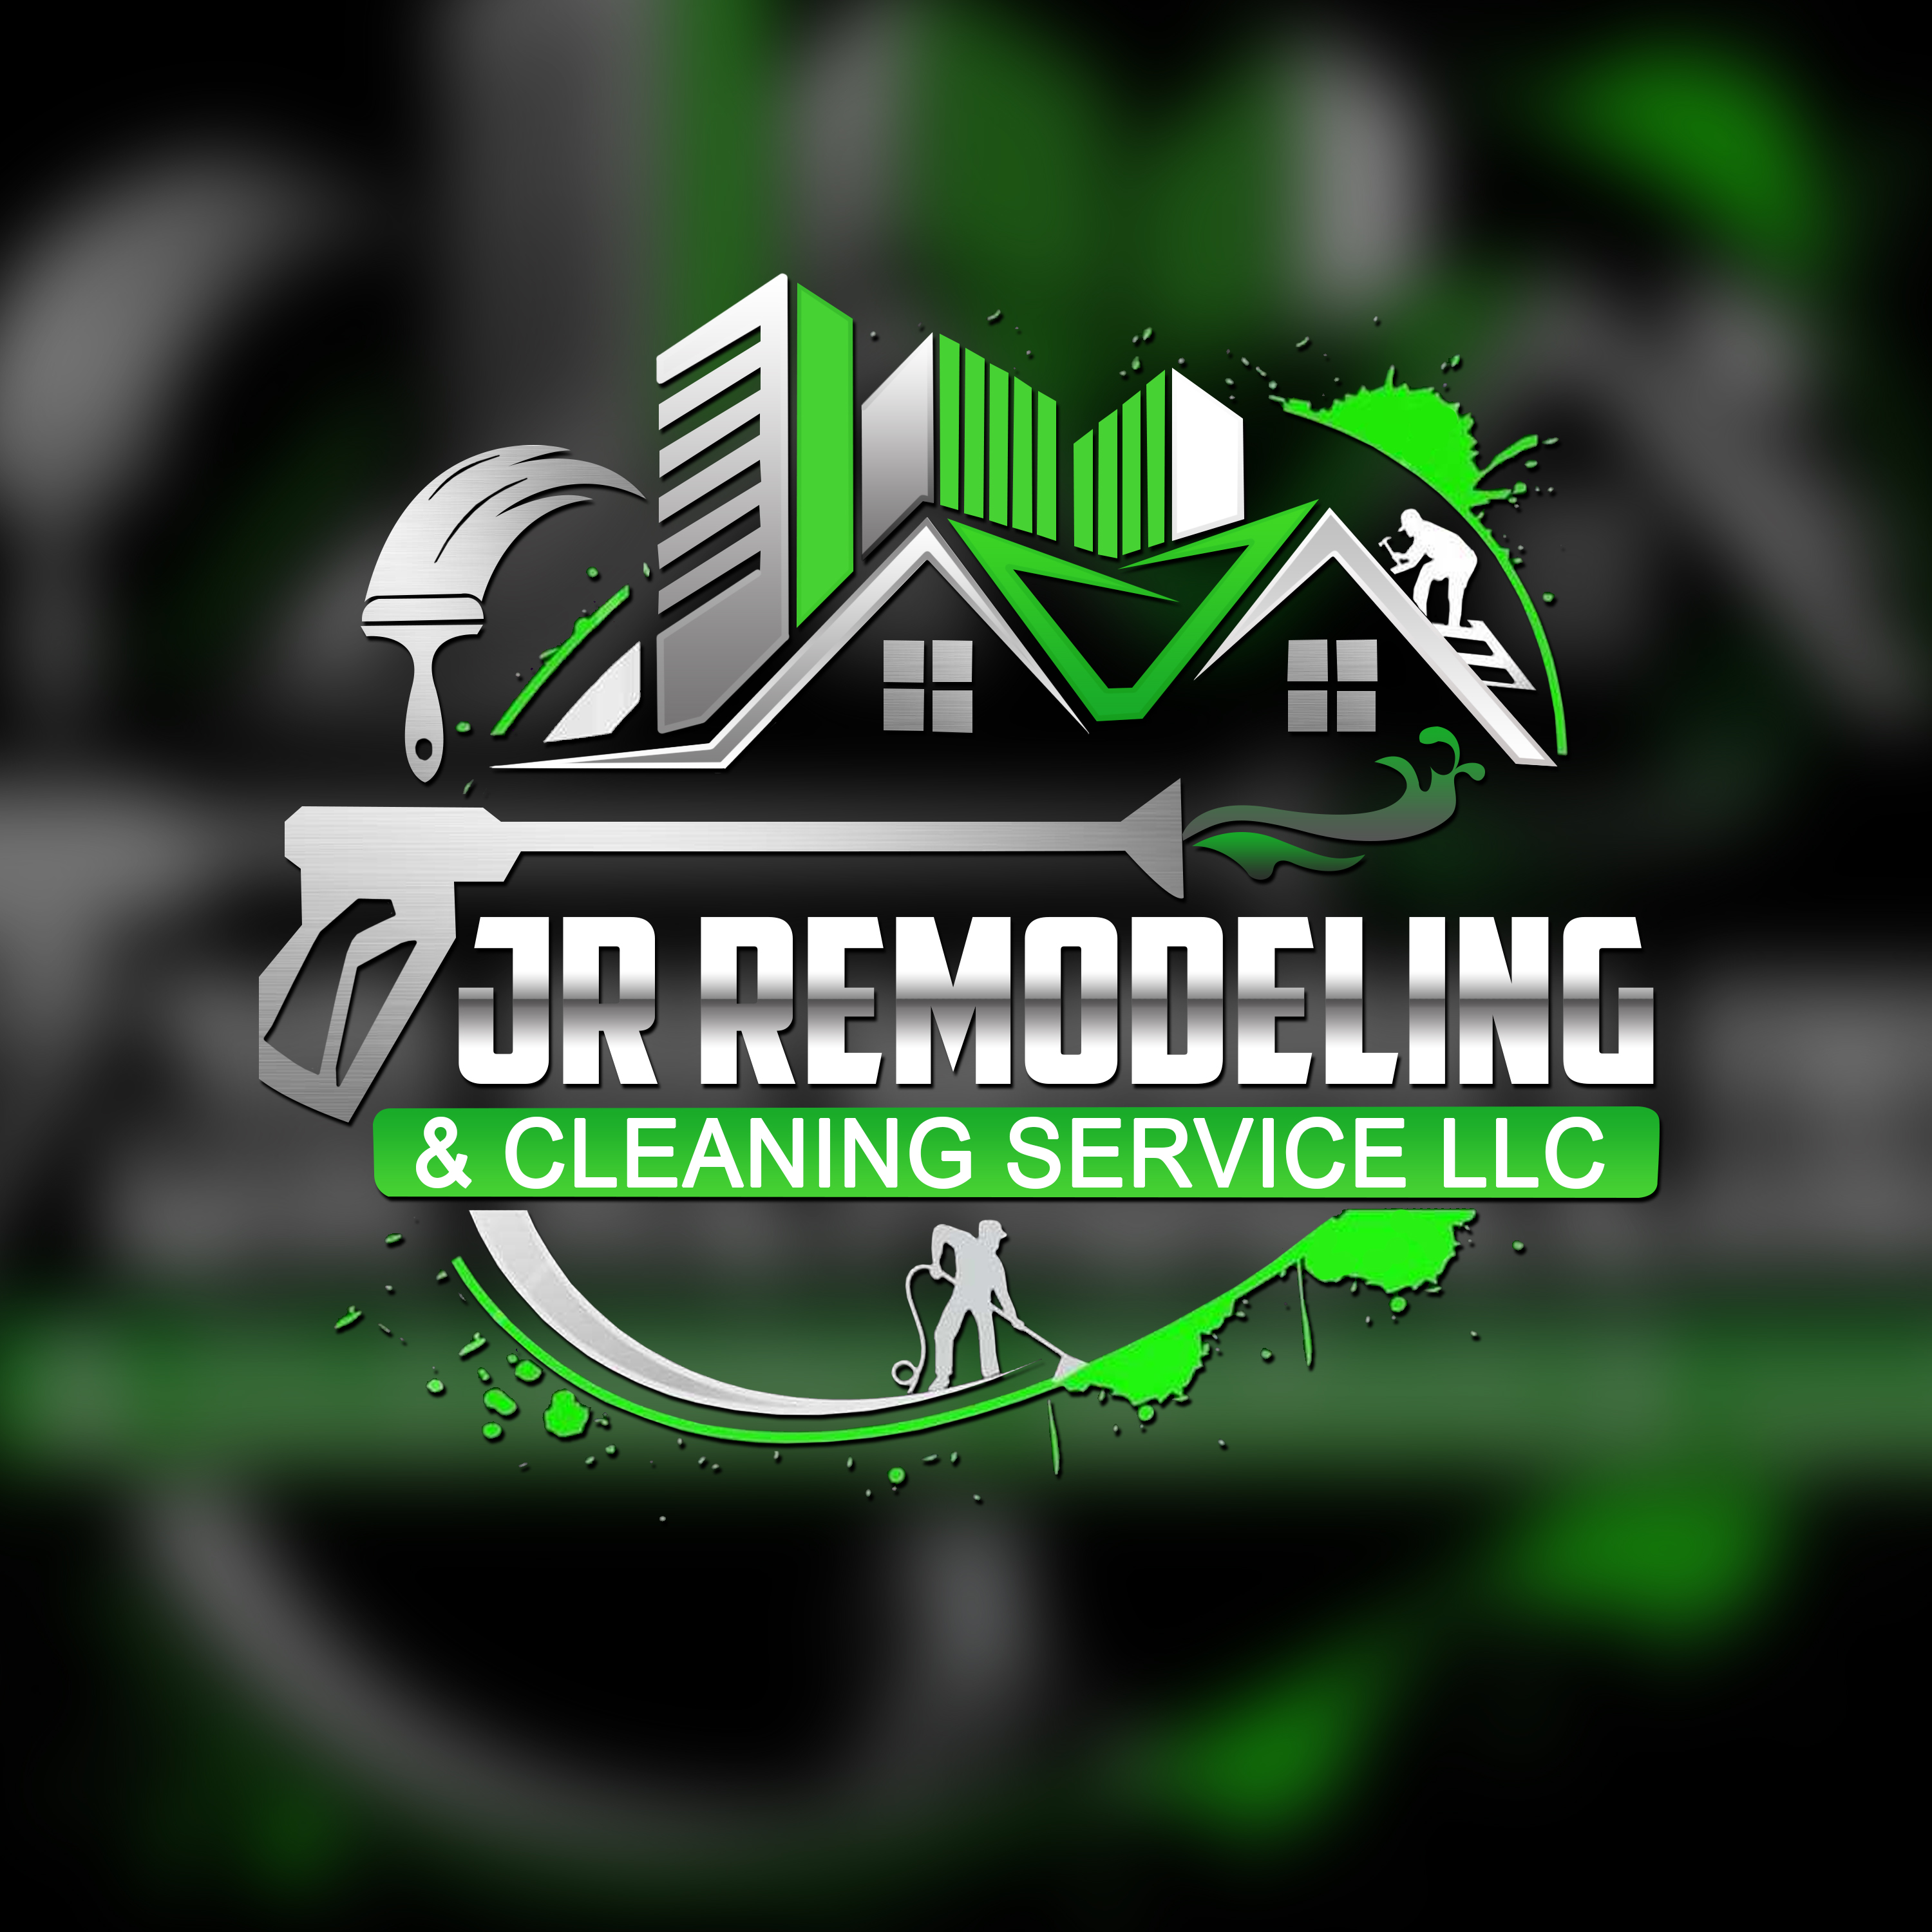 JR Remodeling & Cleaning Service LLC Logo